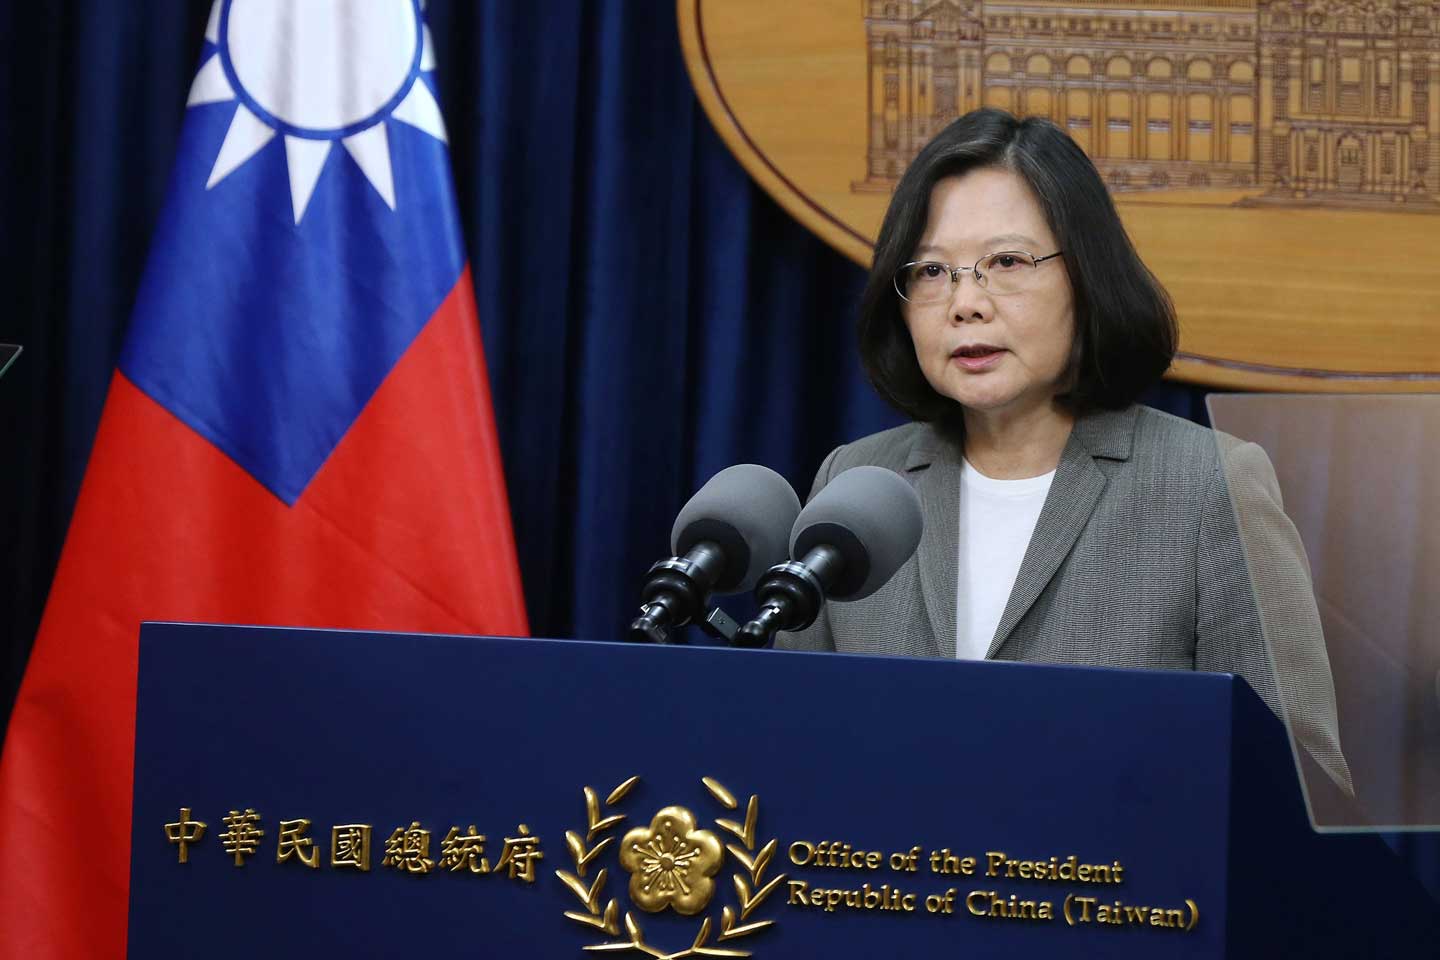 Taiwan’s President, Tsai Ing-wen standing at a podium